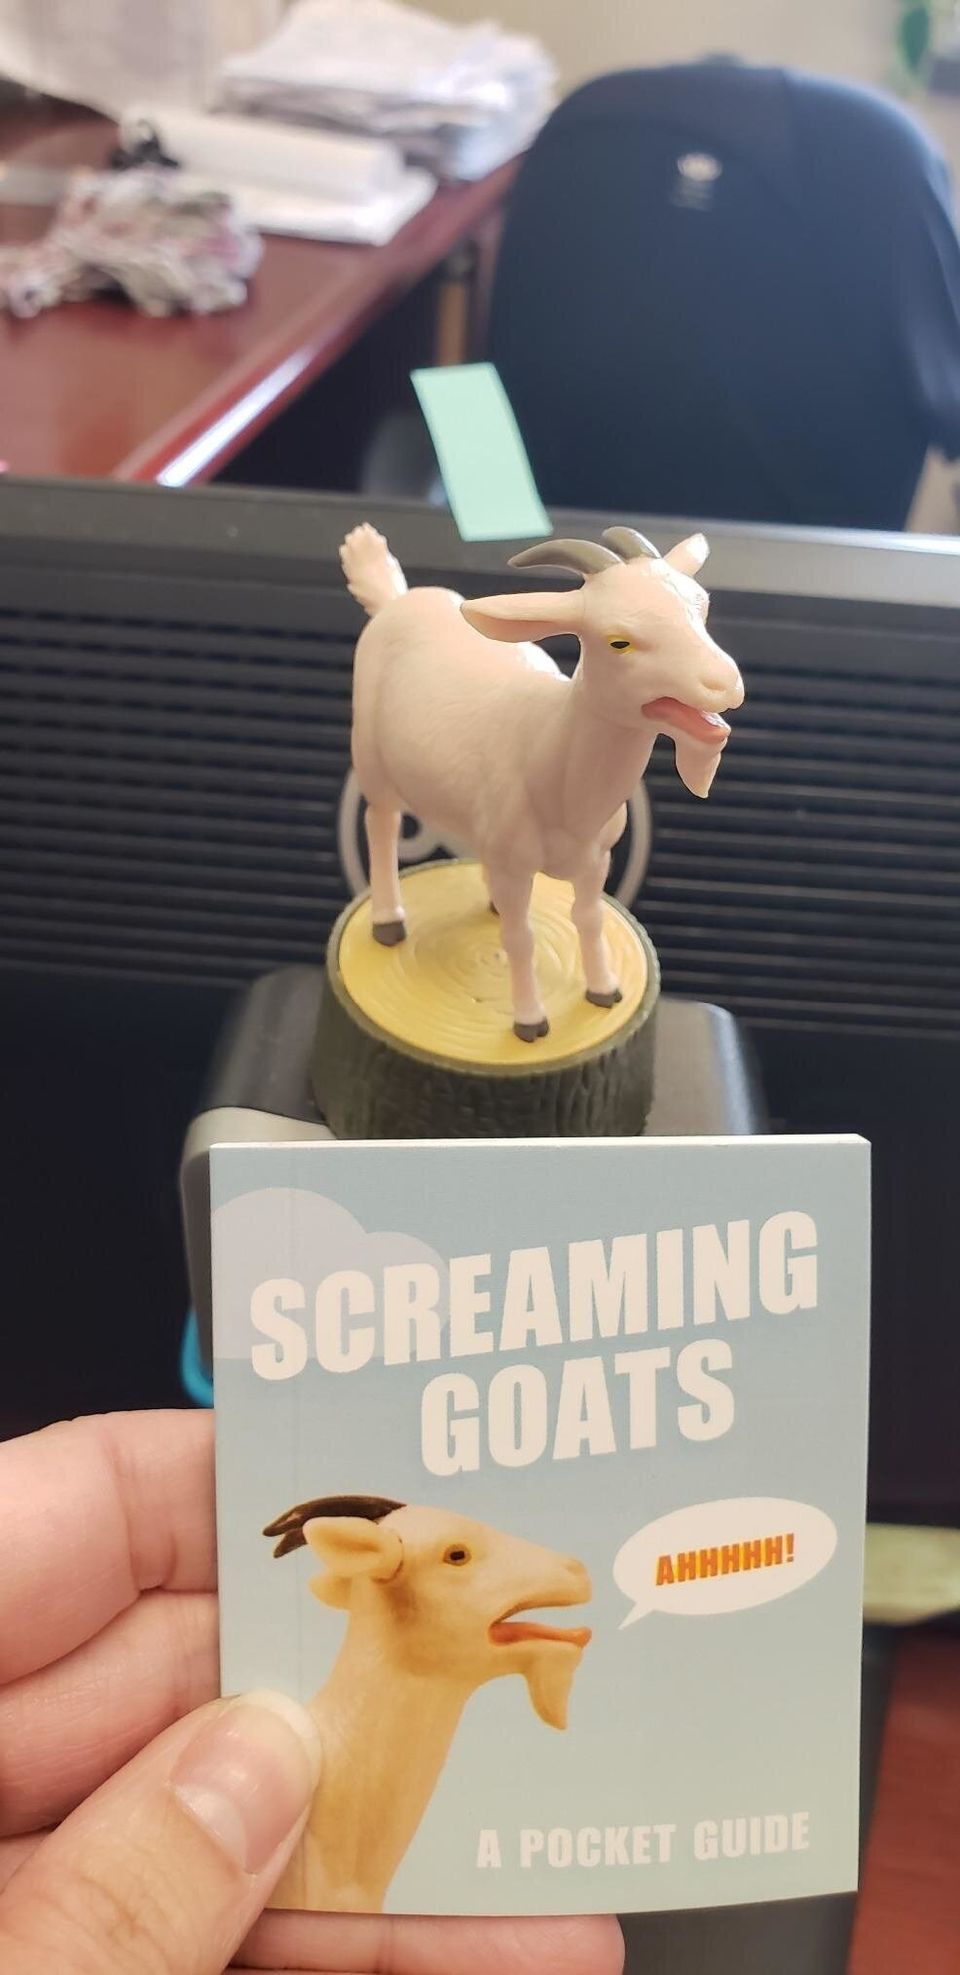 A screaming goat